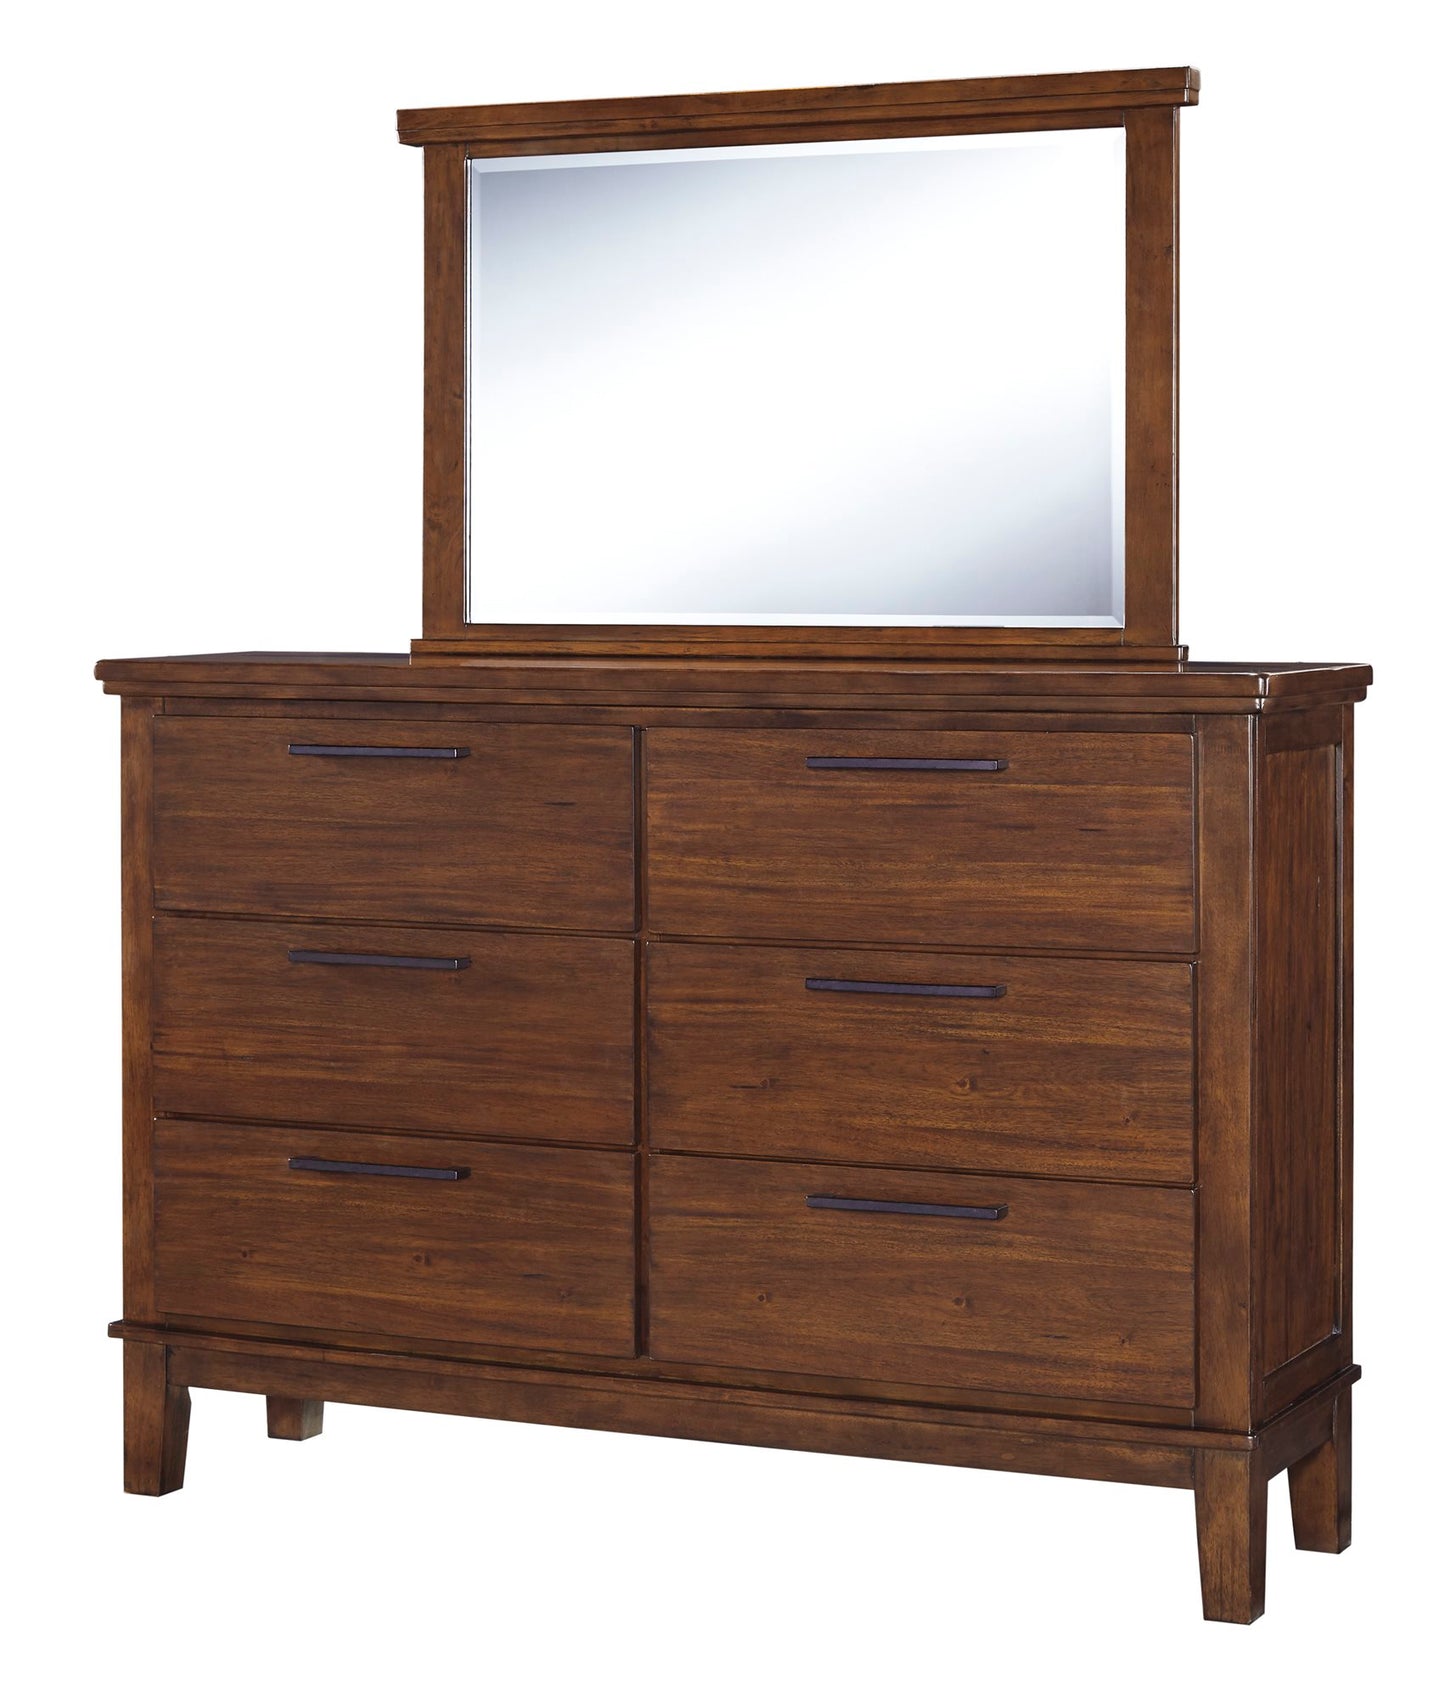 Ashley Ralene 4PC Bedroom Set Queen Upholstered Storage Bed Dresser Mirror One Nightstand in Dark Brown